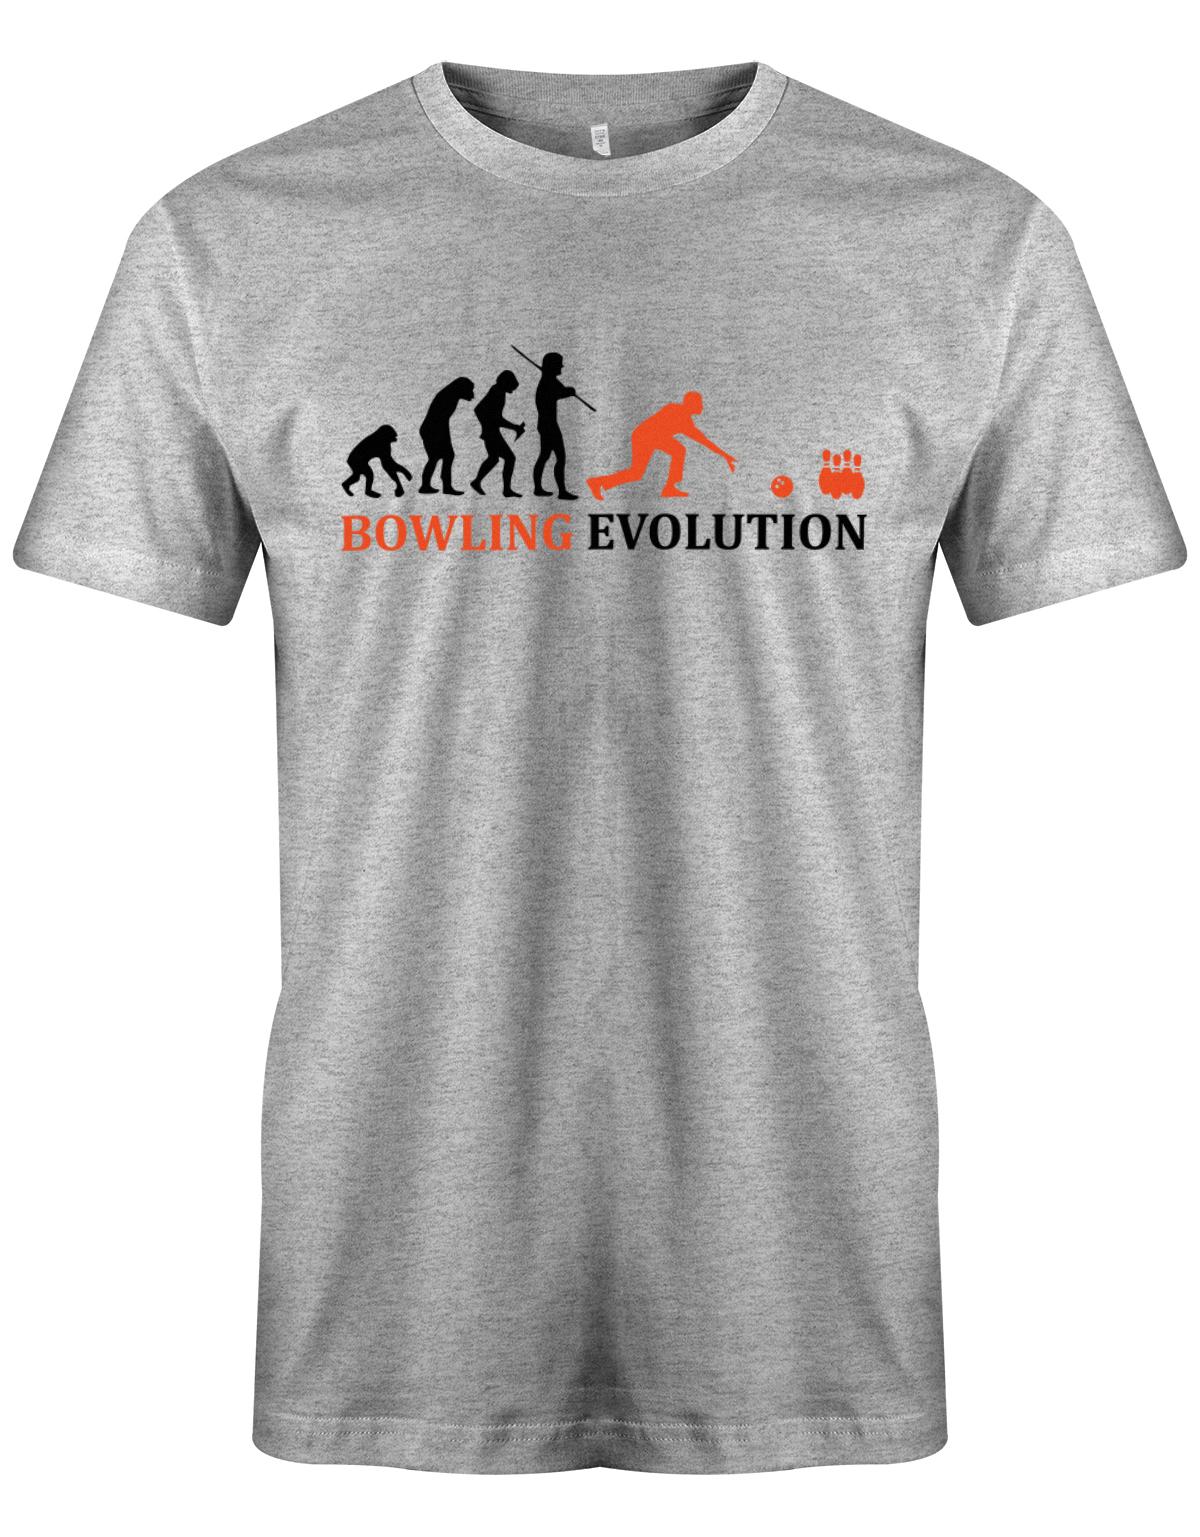 Bowling-Evolution-Bowler-Herren-Shirt-Grau